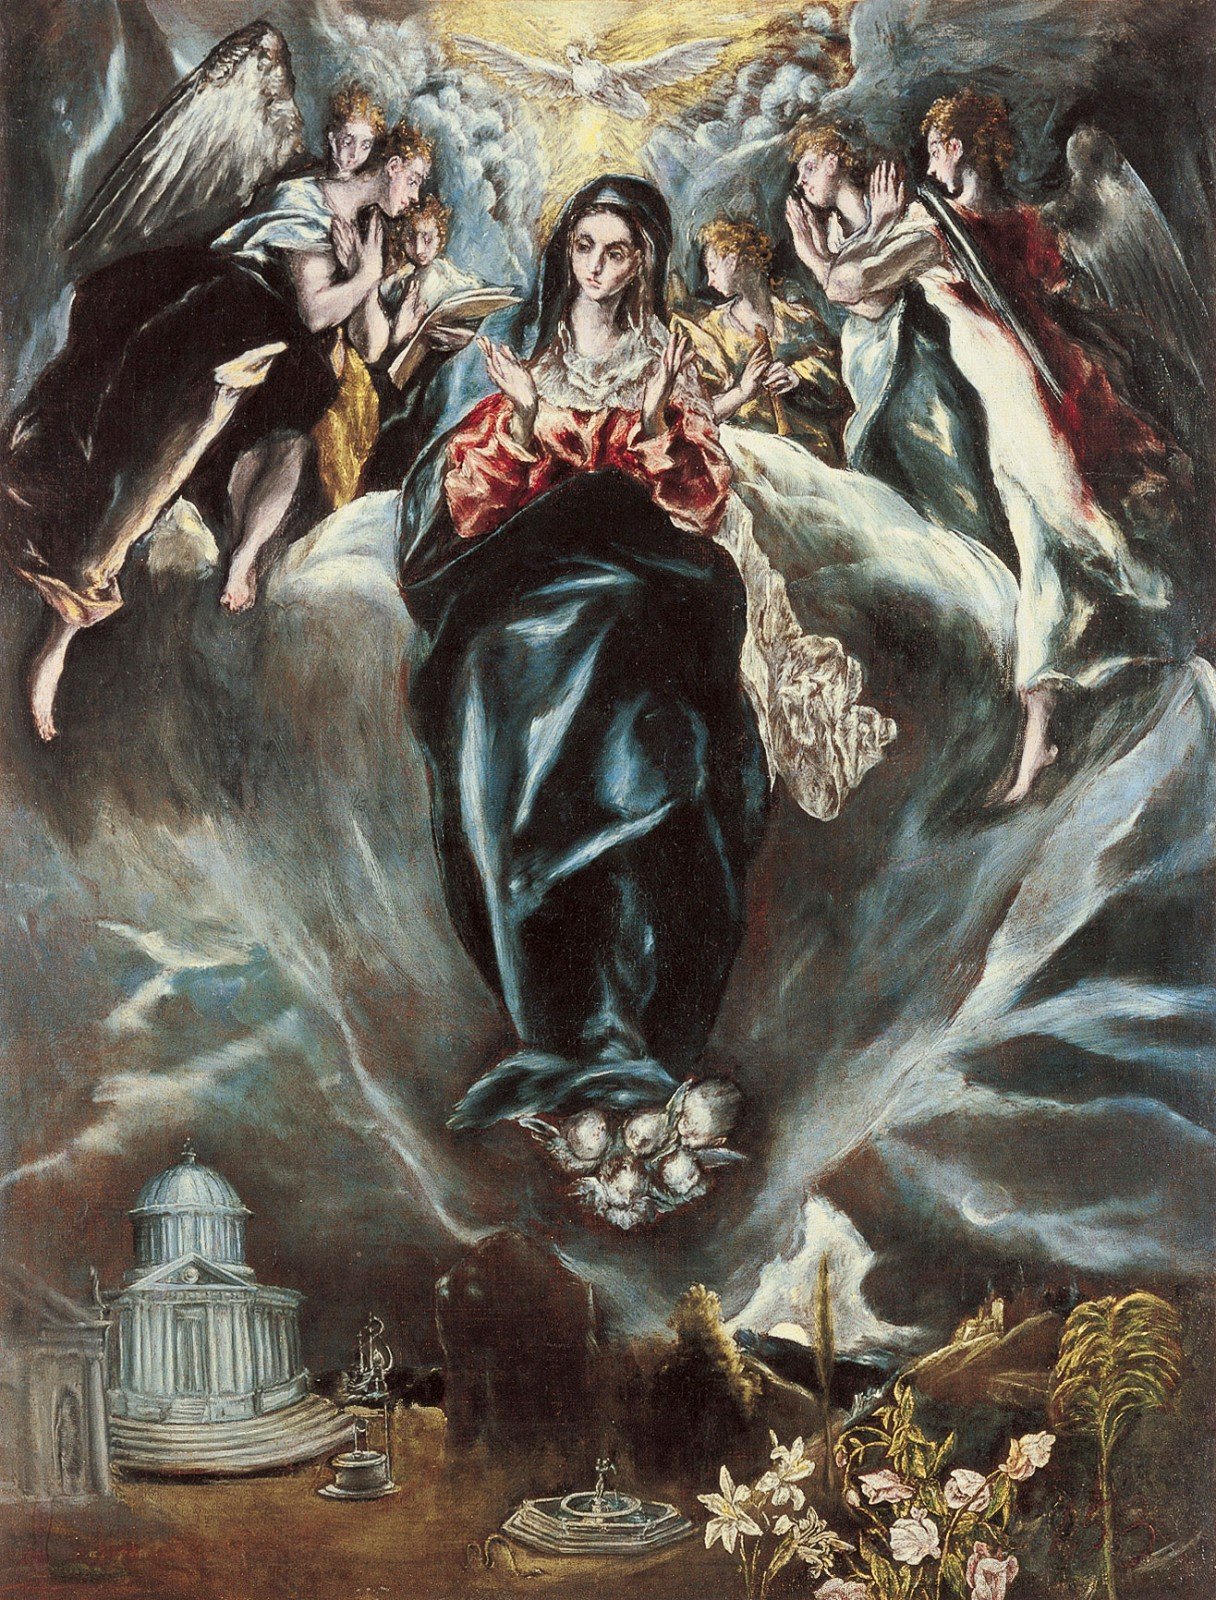 El Greco, “The immaculate Conception”, 1608-14, Museo Thyssen-Bornemisza